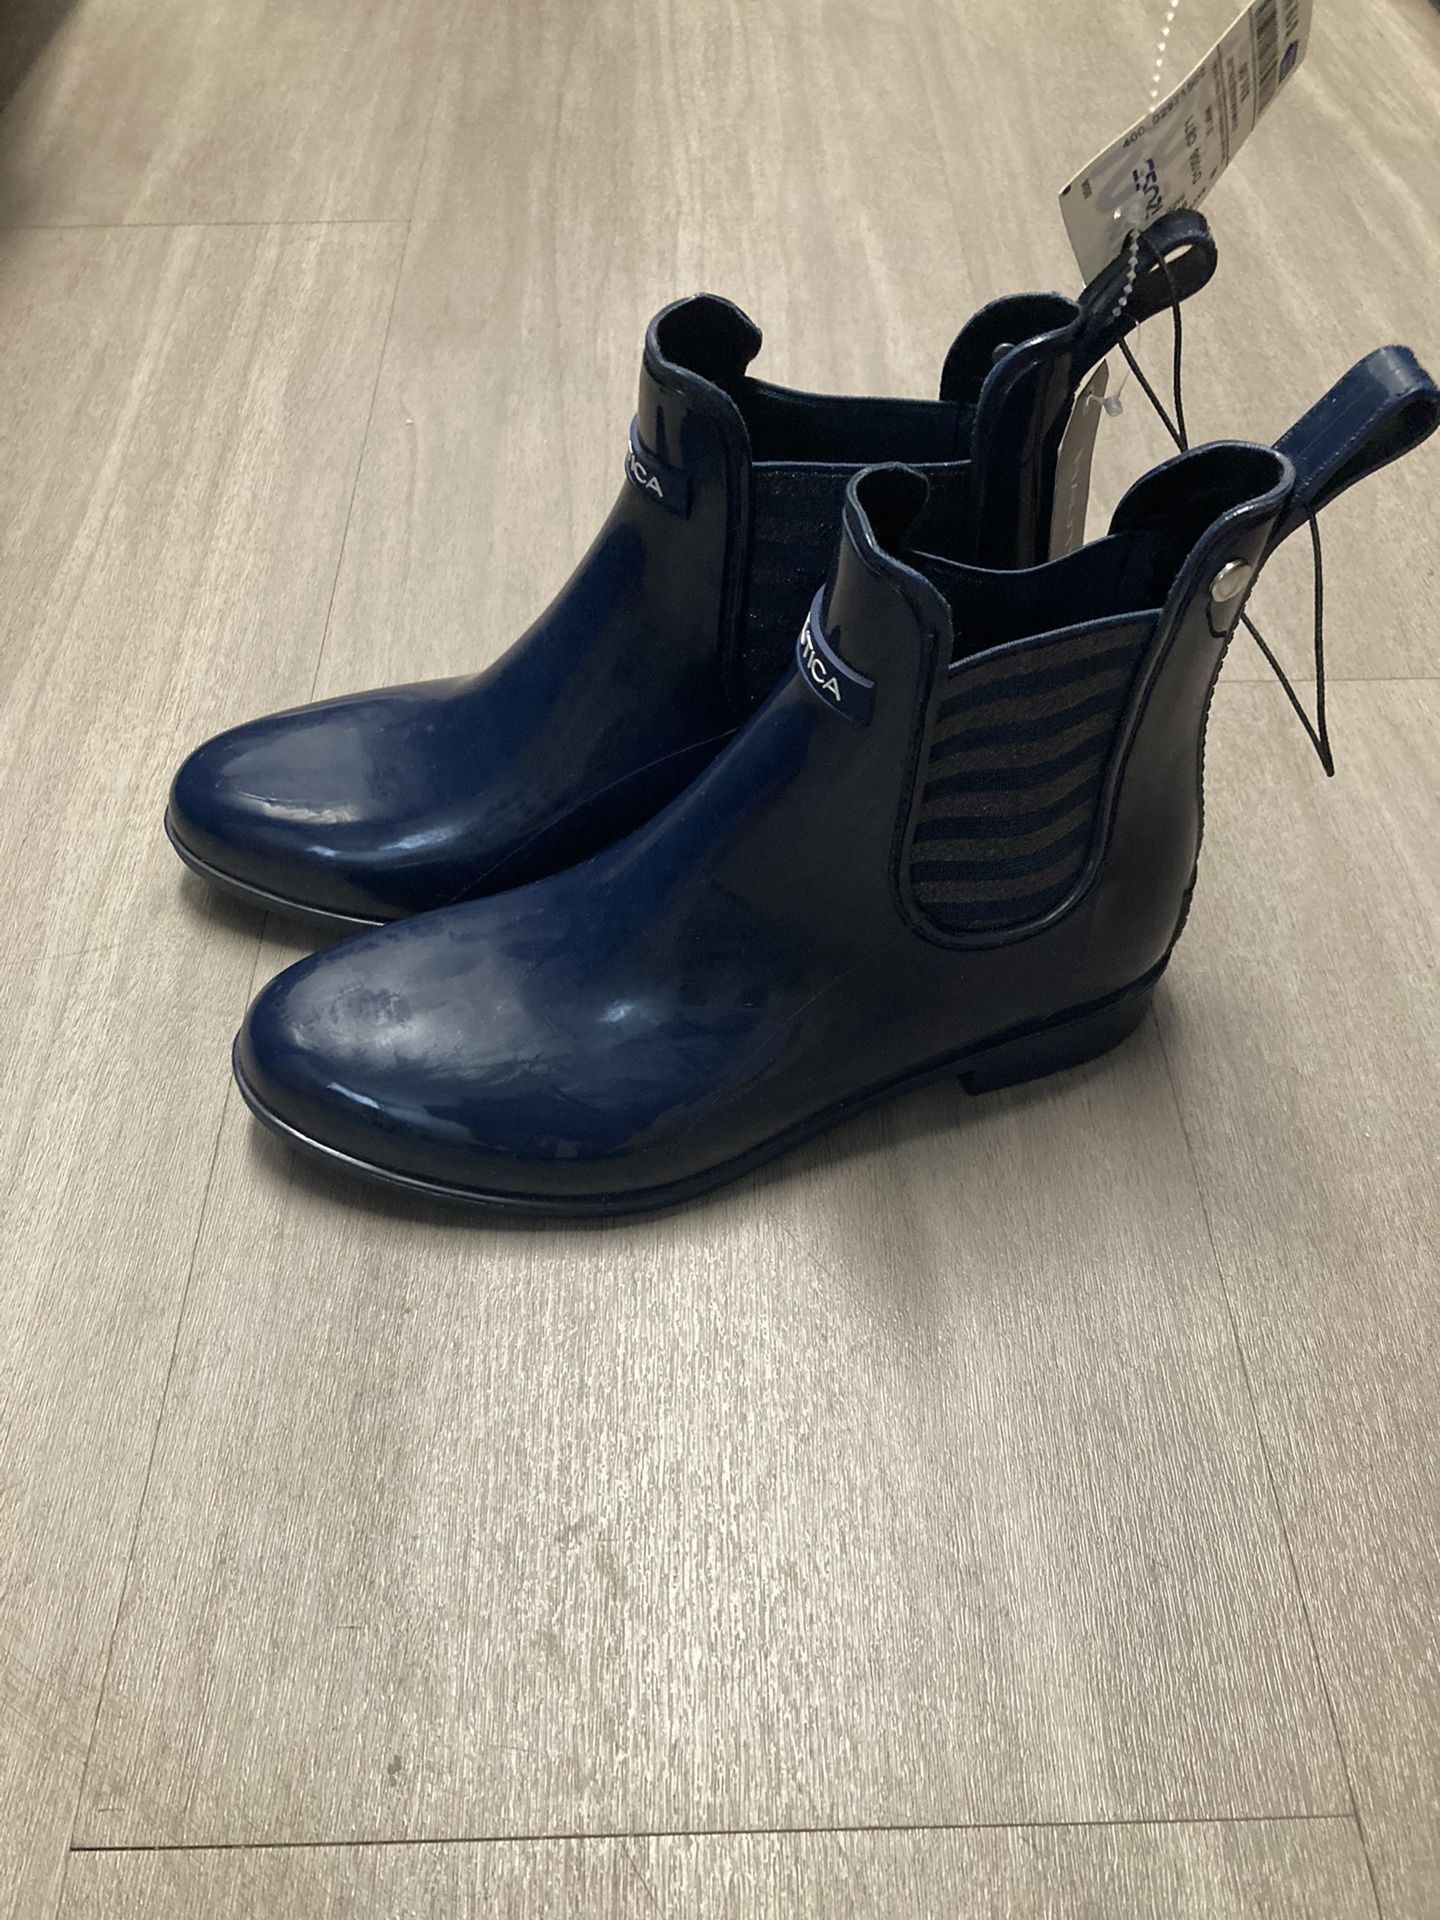 Brand New Nautica Rain Boots